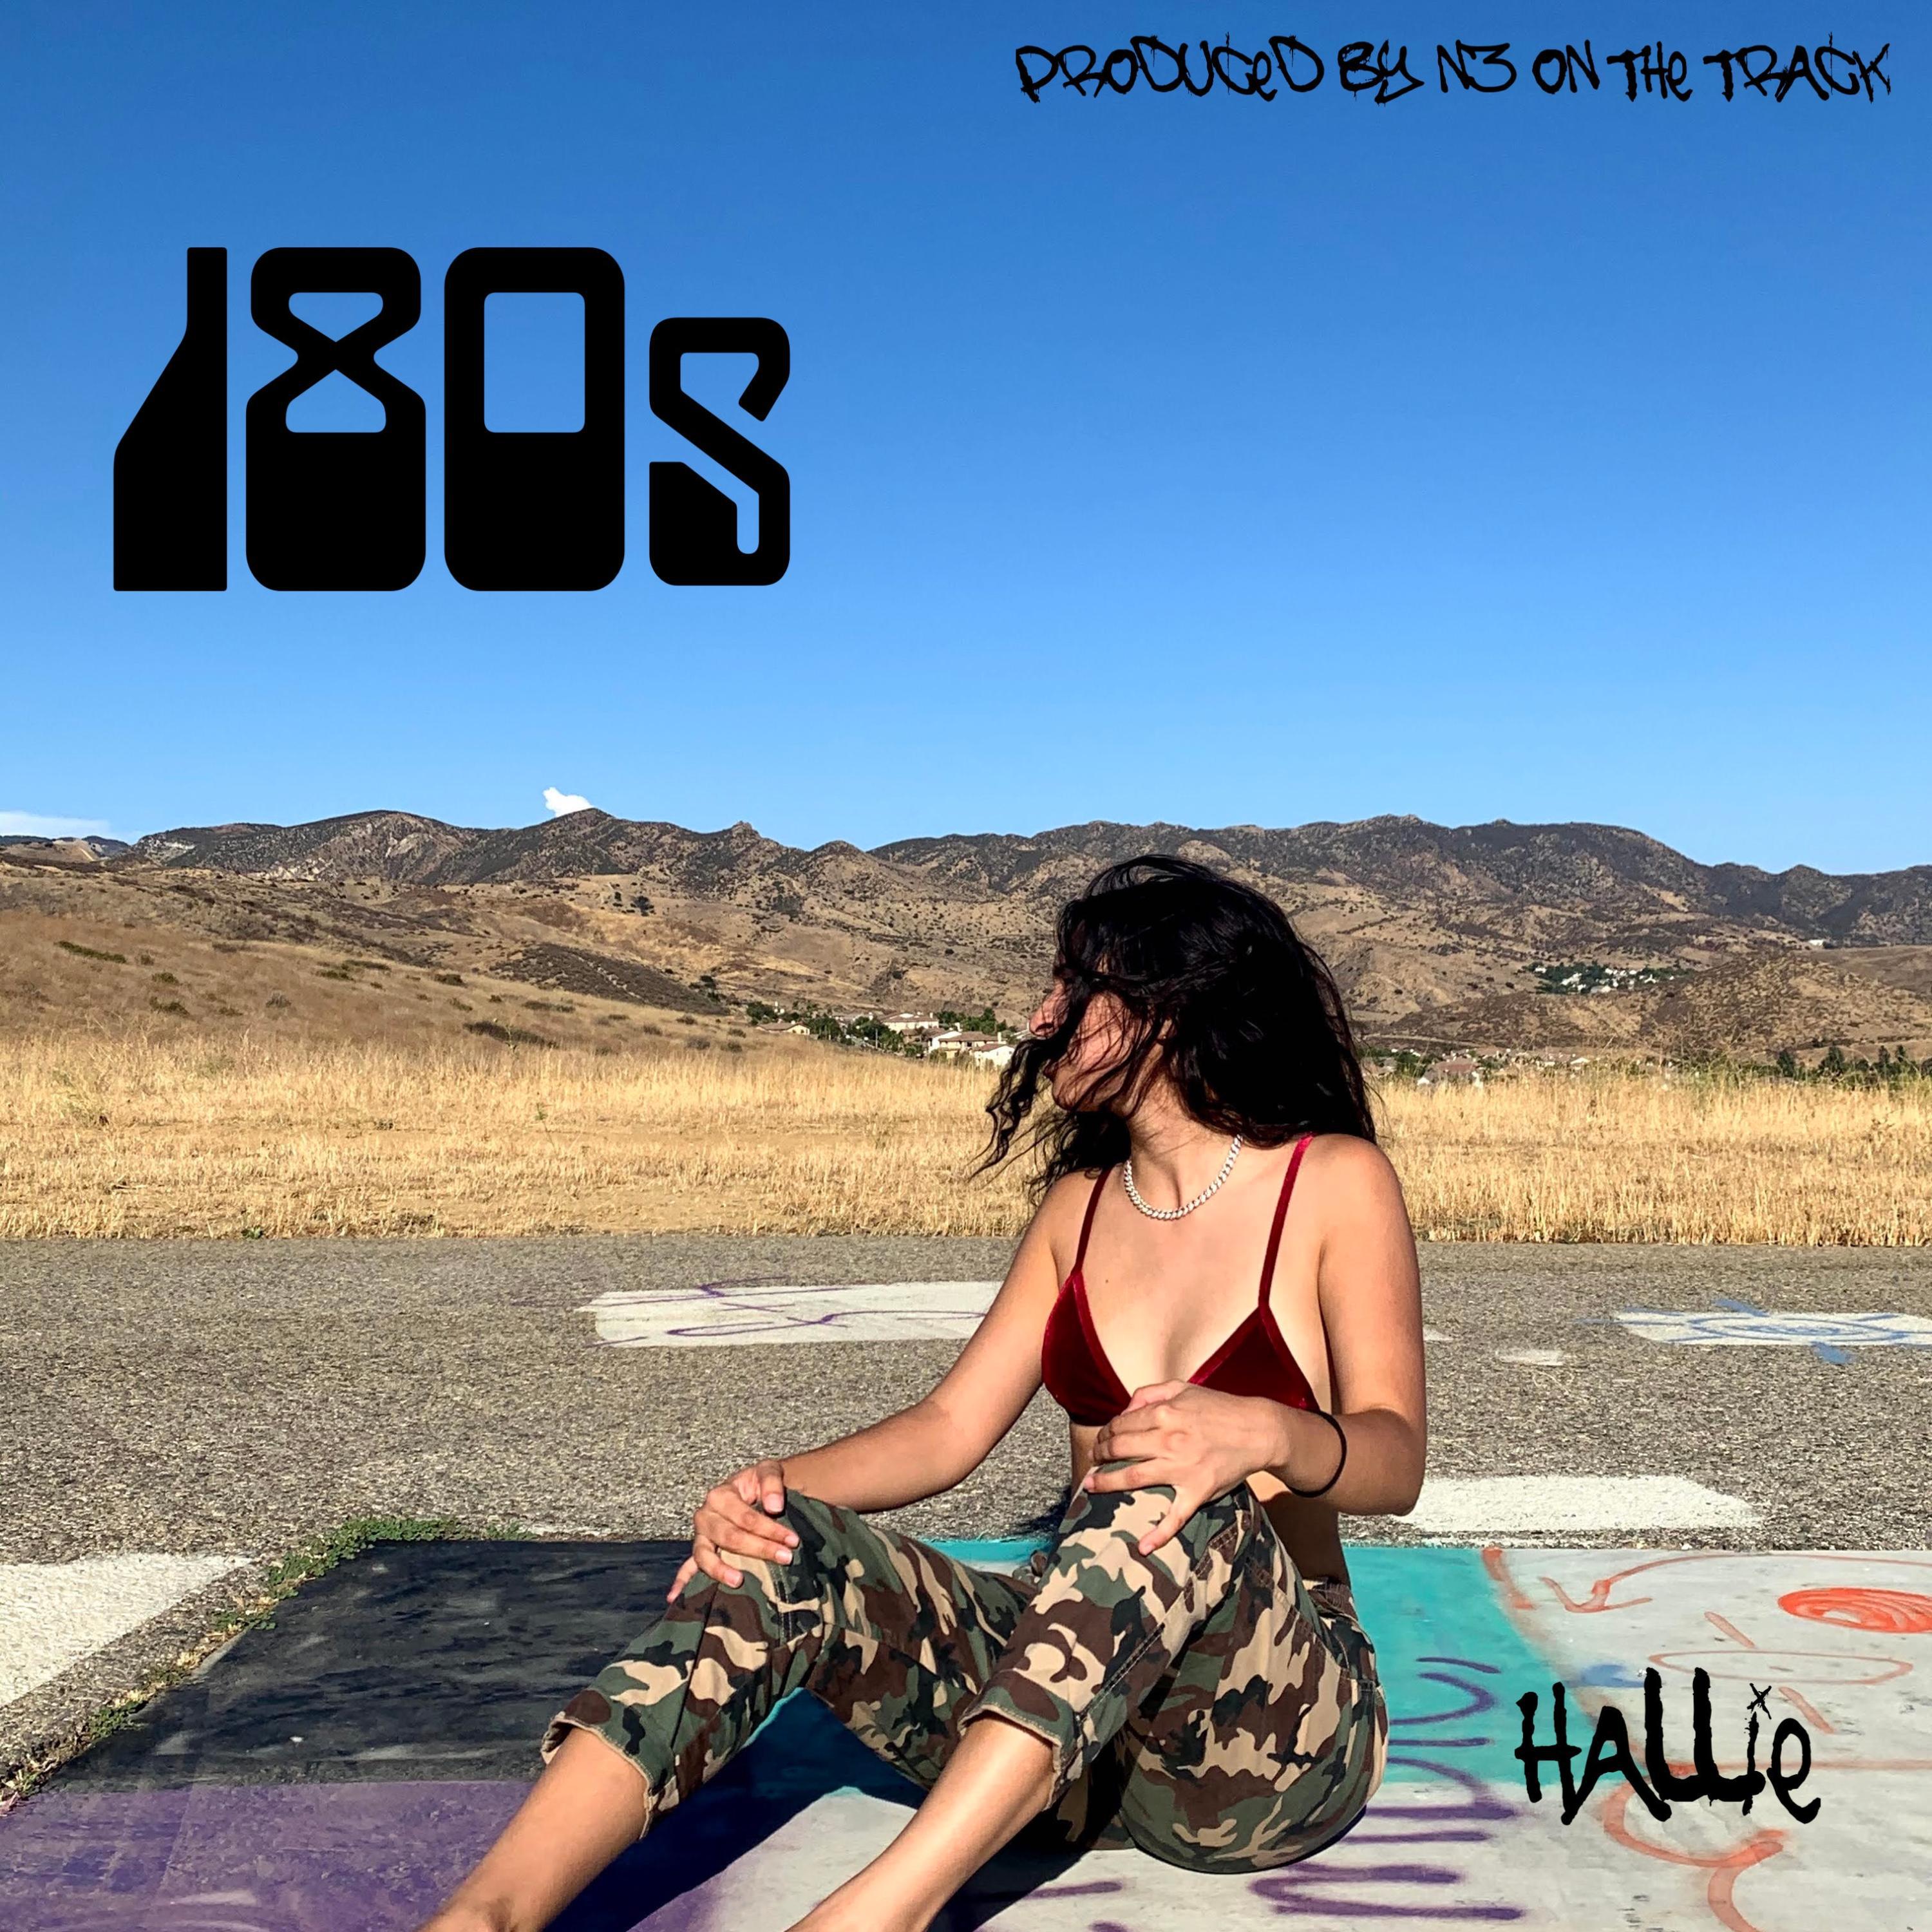 Hallie - 180s